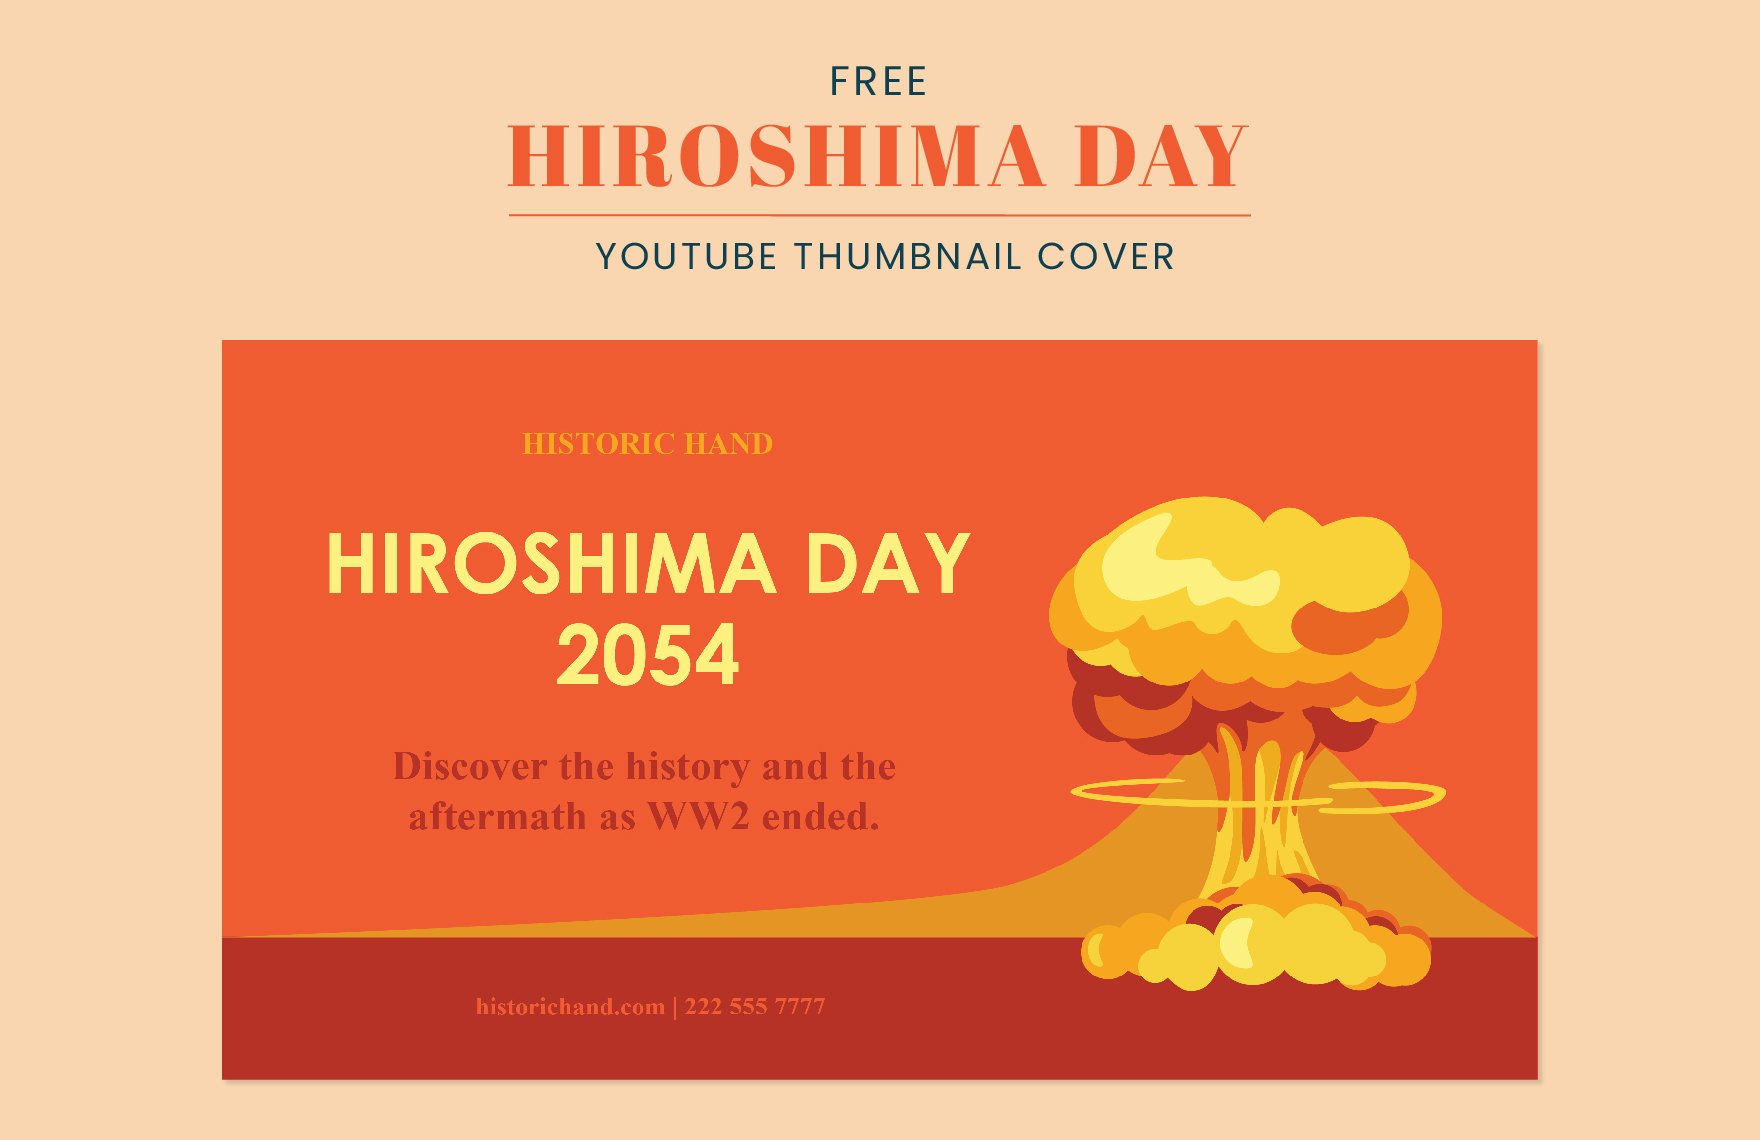 Hiroshima Day Youtube Thumbnail Cover